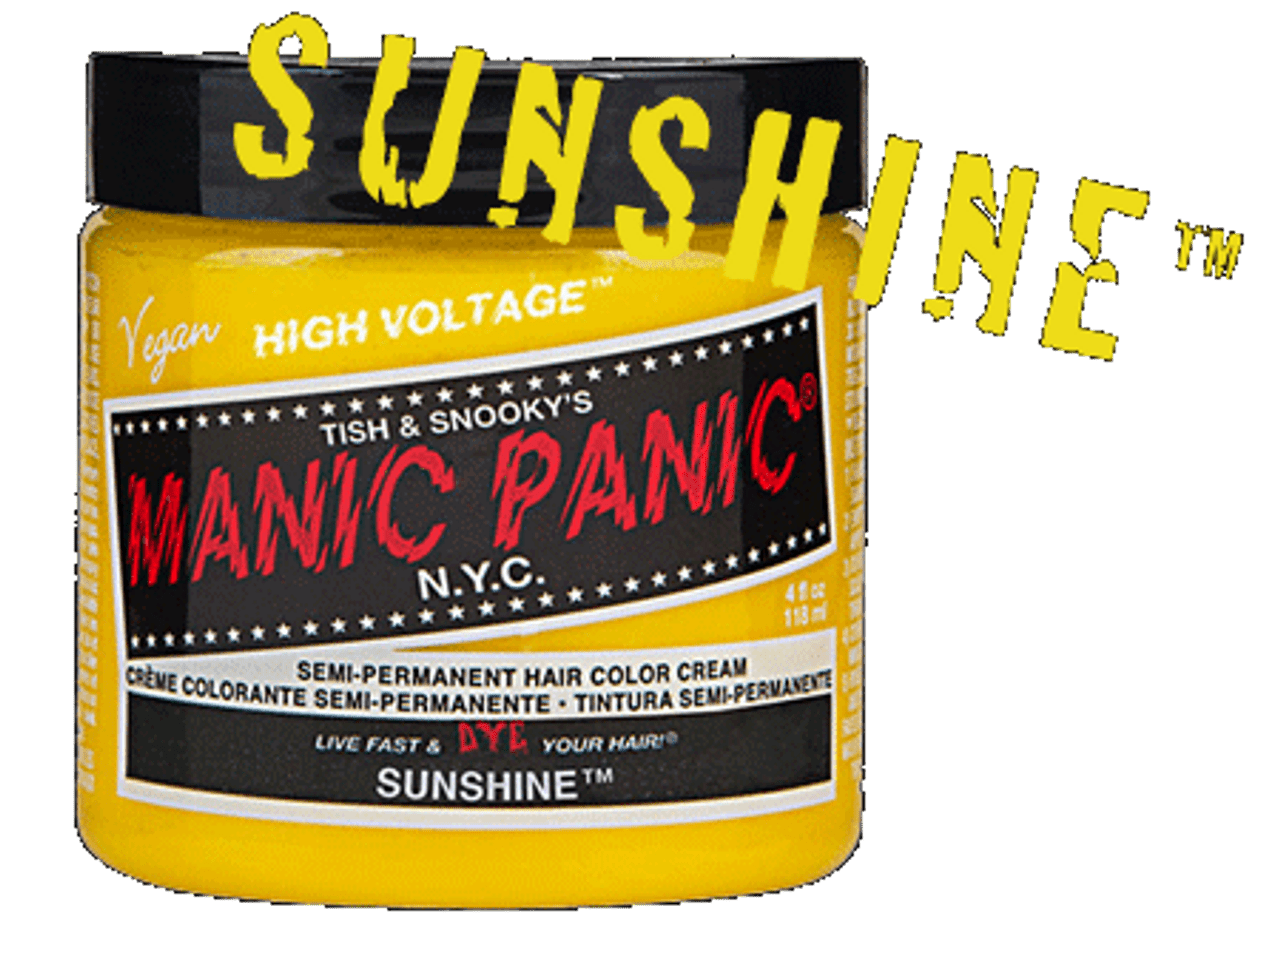 Manic Panic Semi-Permanent Hair Color Cream - wide 8